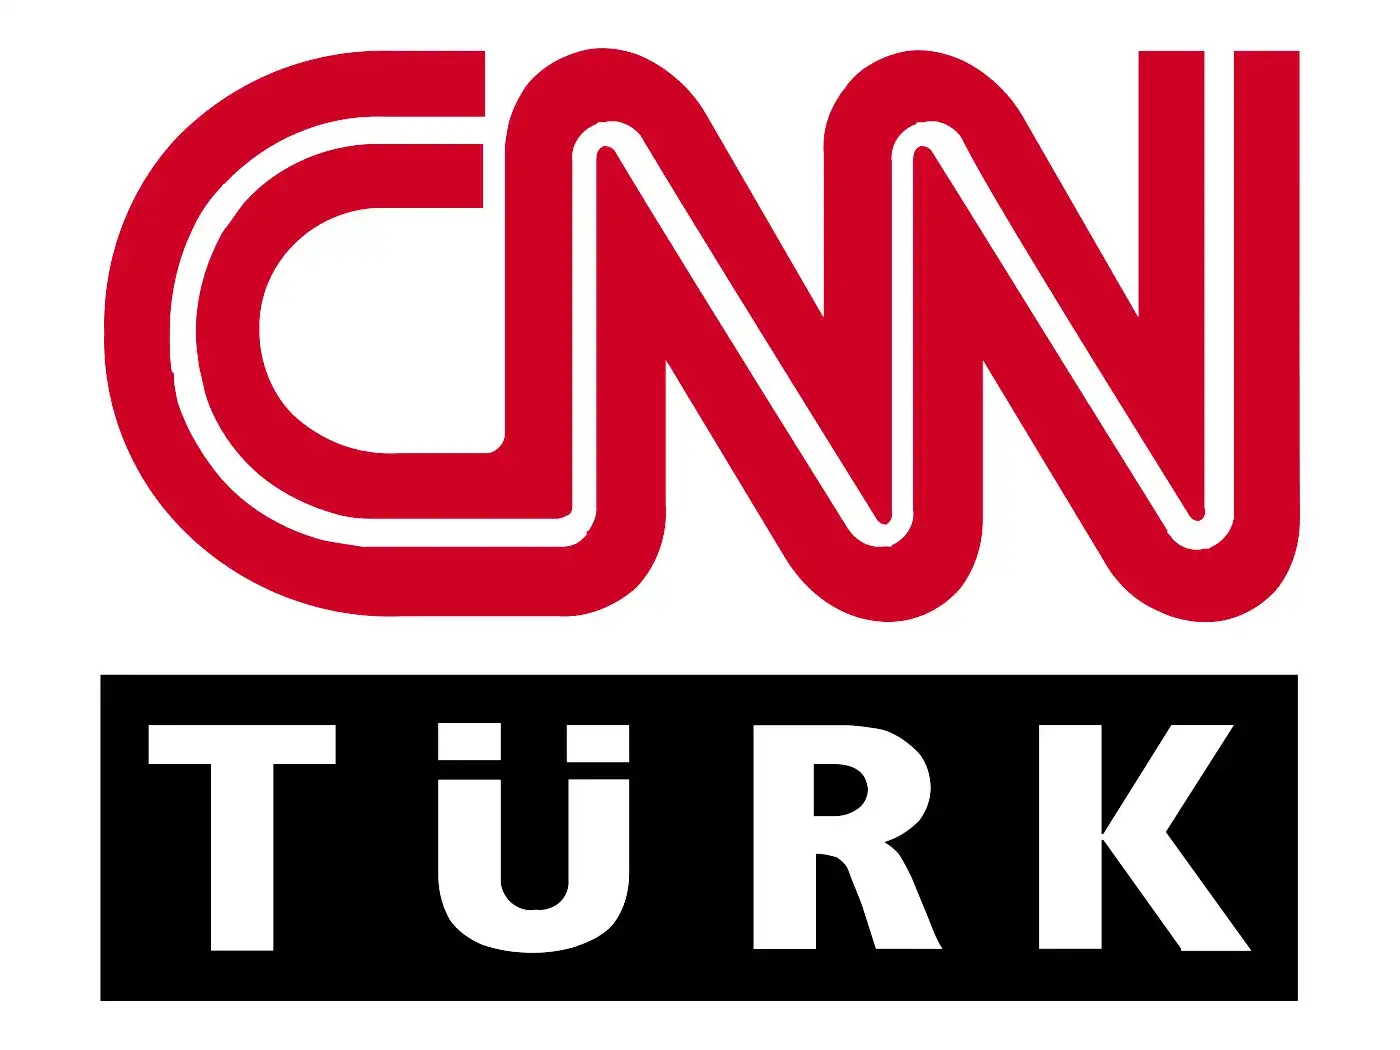 Cnn live. CNN. CNN Turk. CNN Turk logo. Турецкое Телевидение логотип.